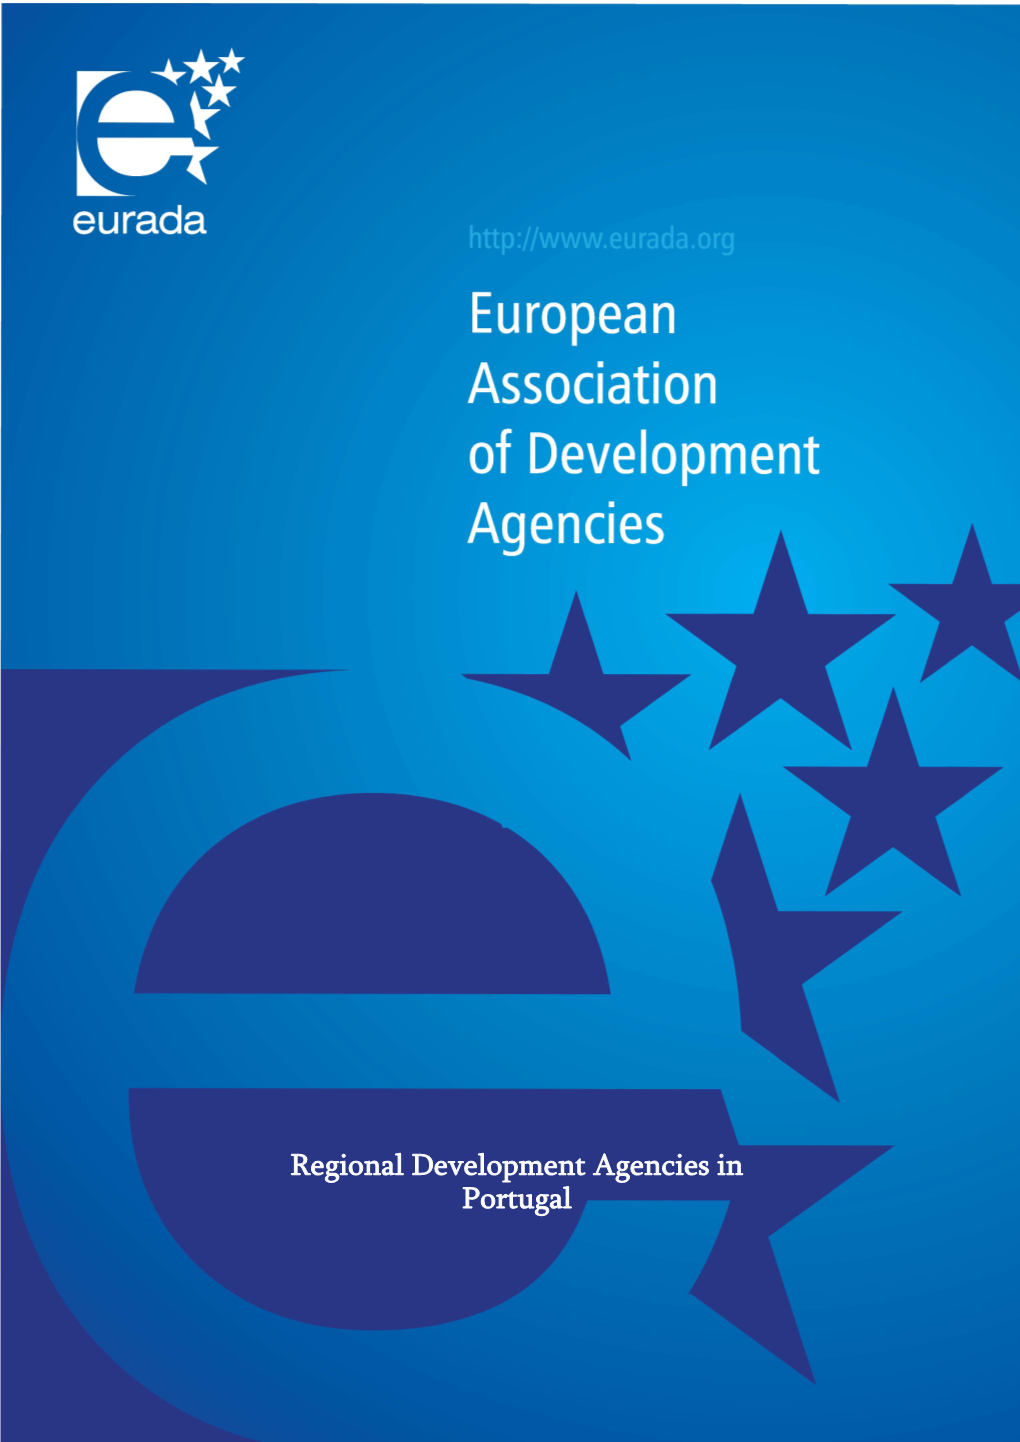 Regional Development Agencies in Portugal